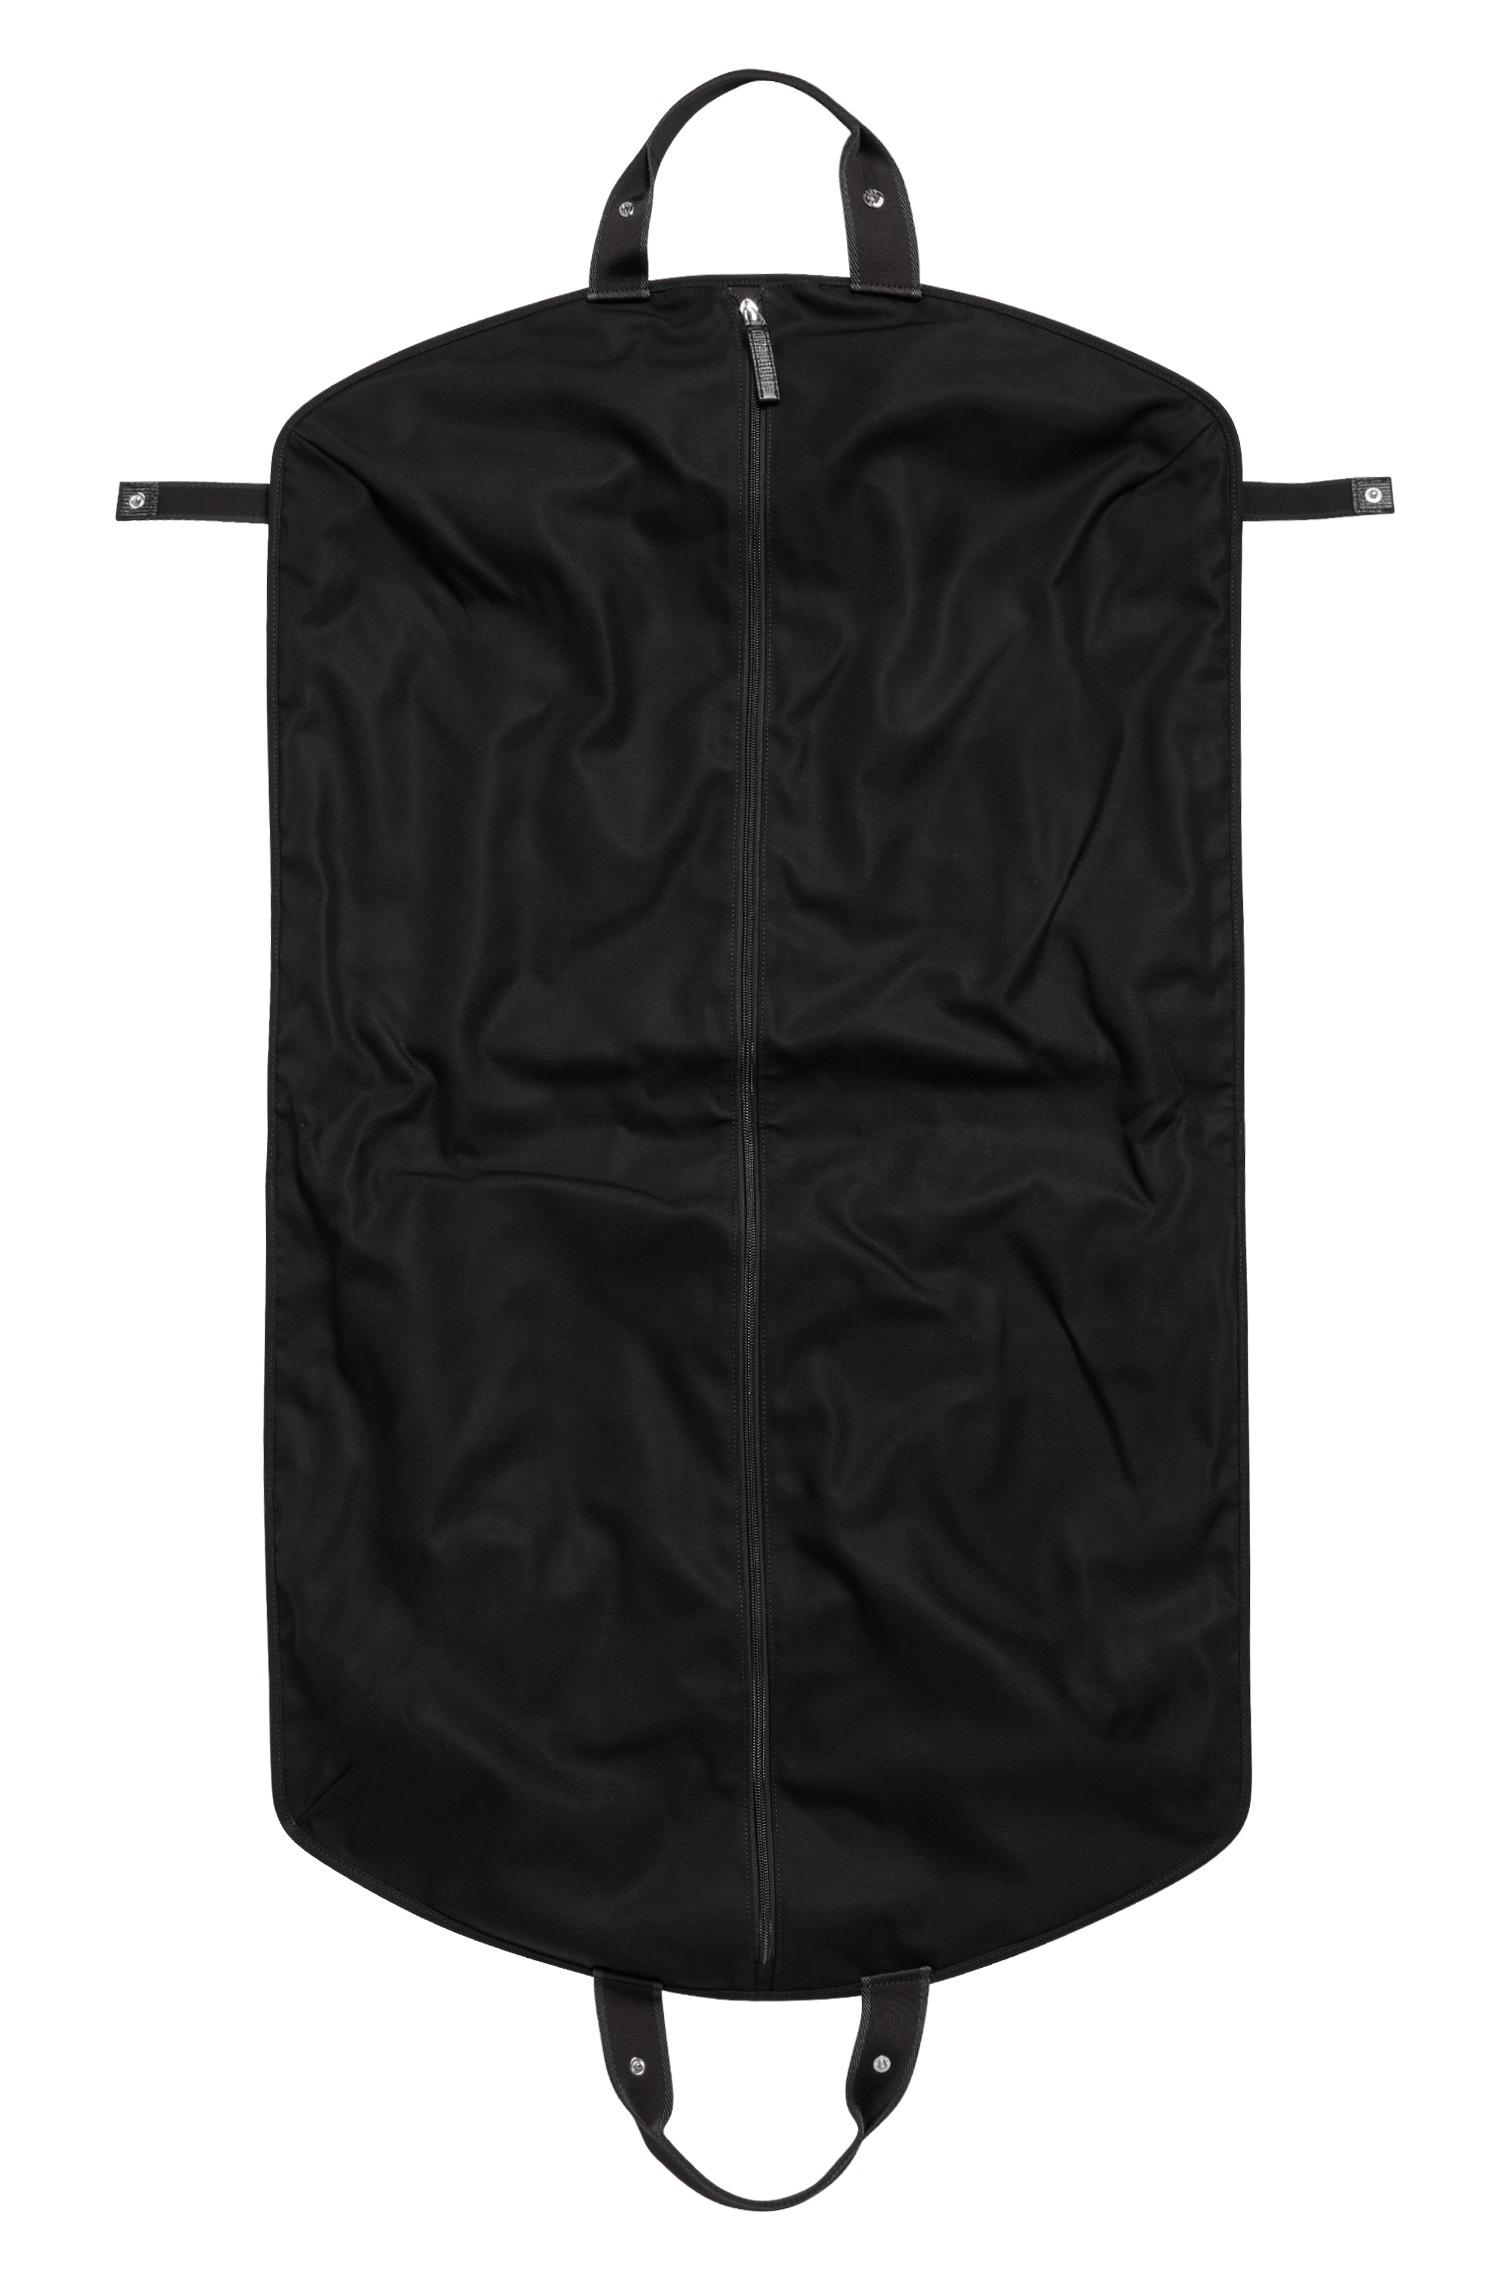 hugo boss suit carrier bag